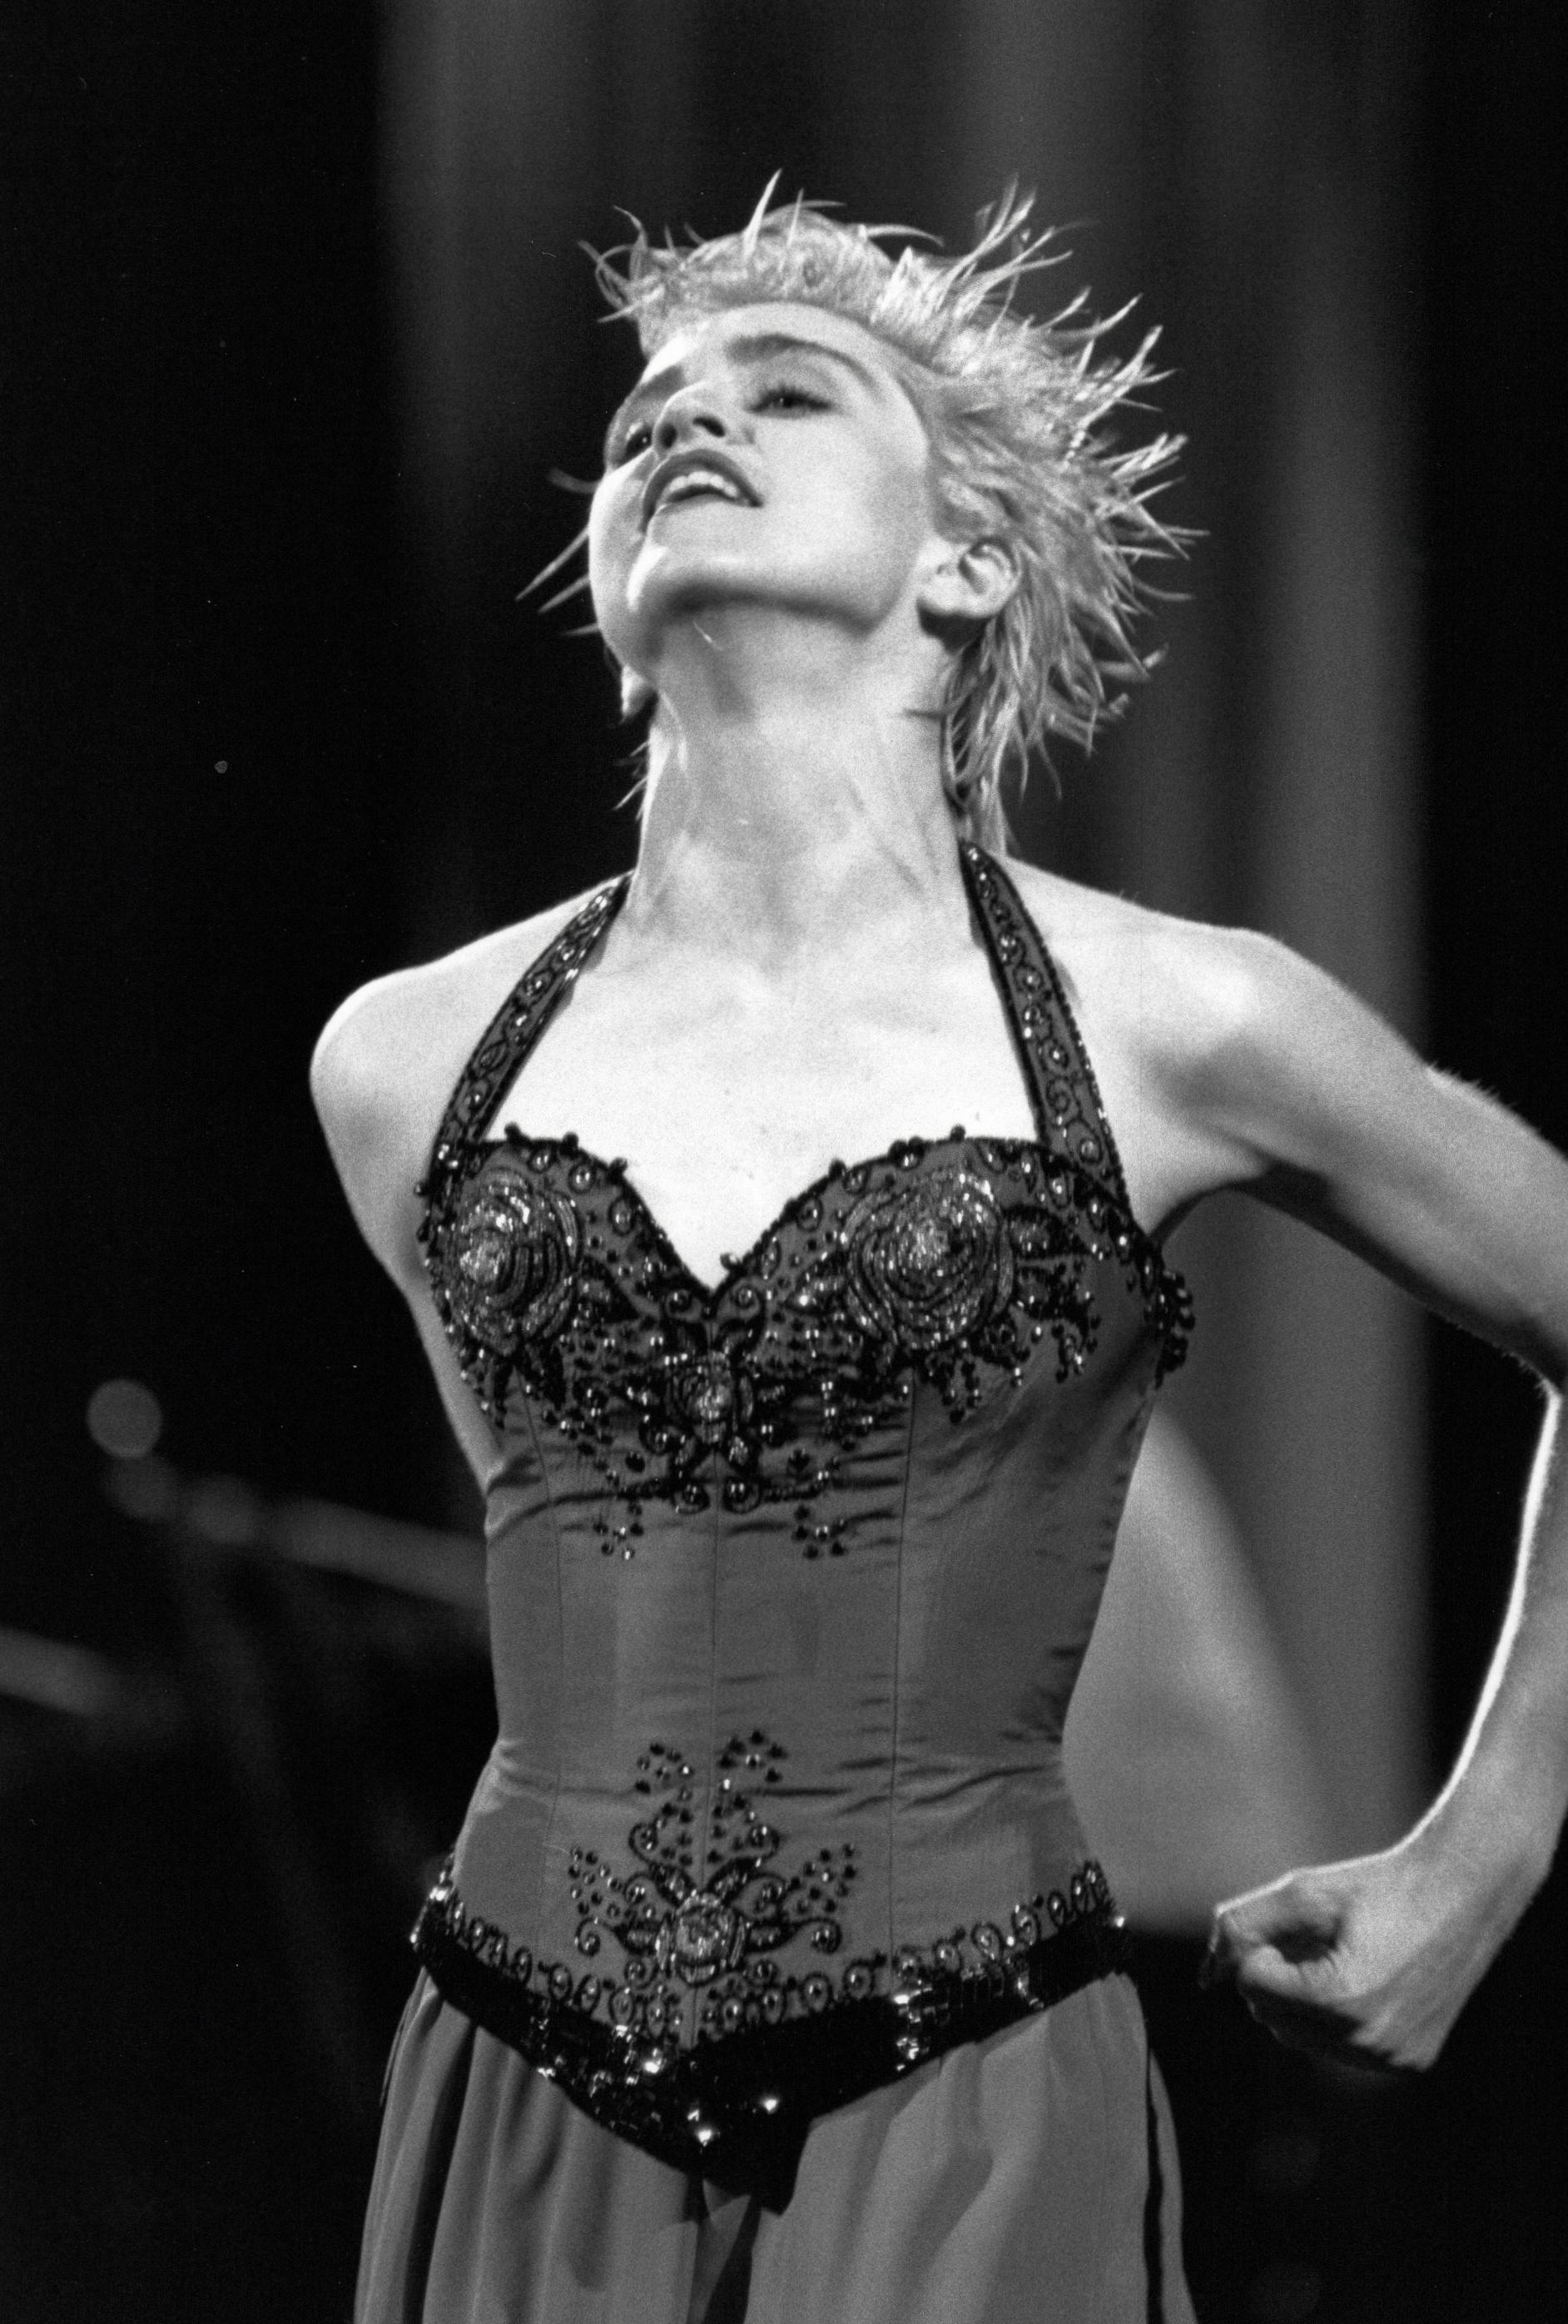 Kevin Mazur Portrait Photograph - Madonna Throwing Head Back on Stage Vintage Original Photograph